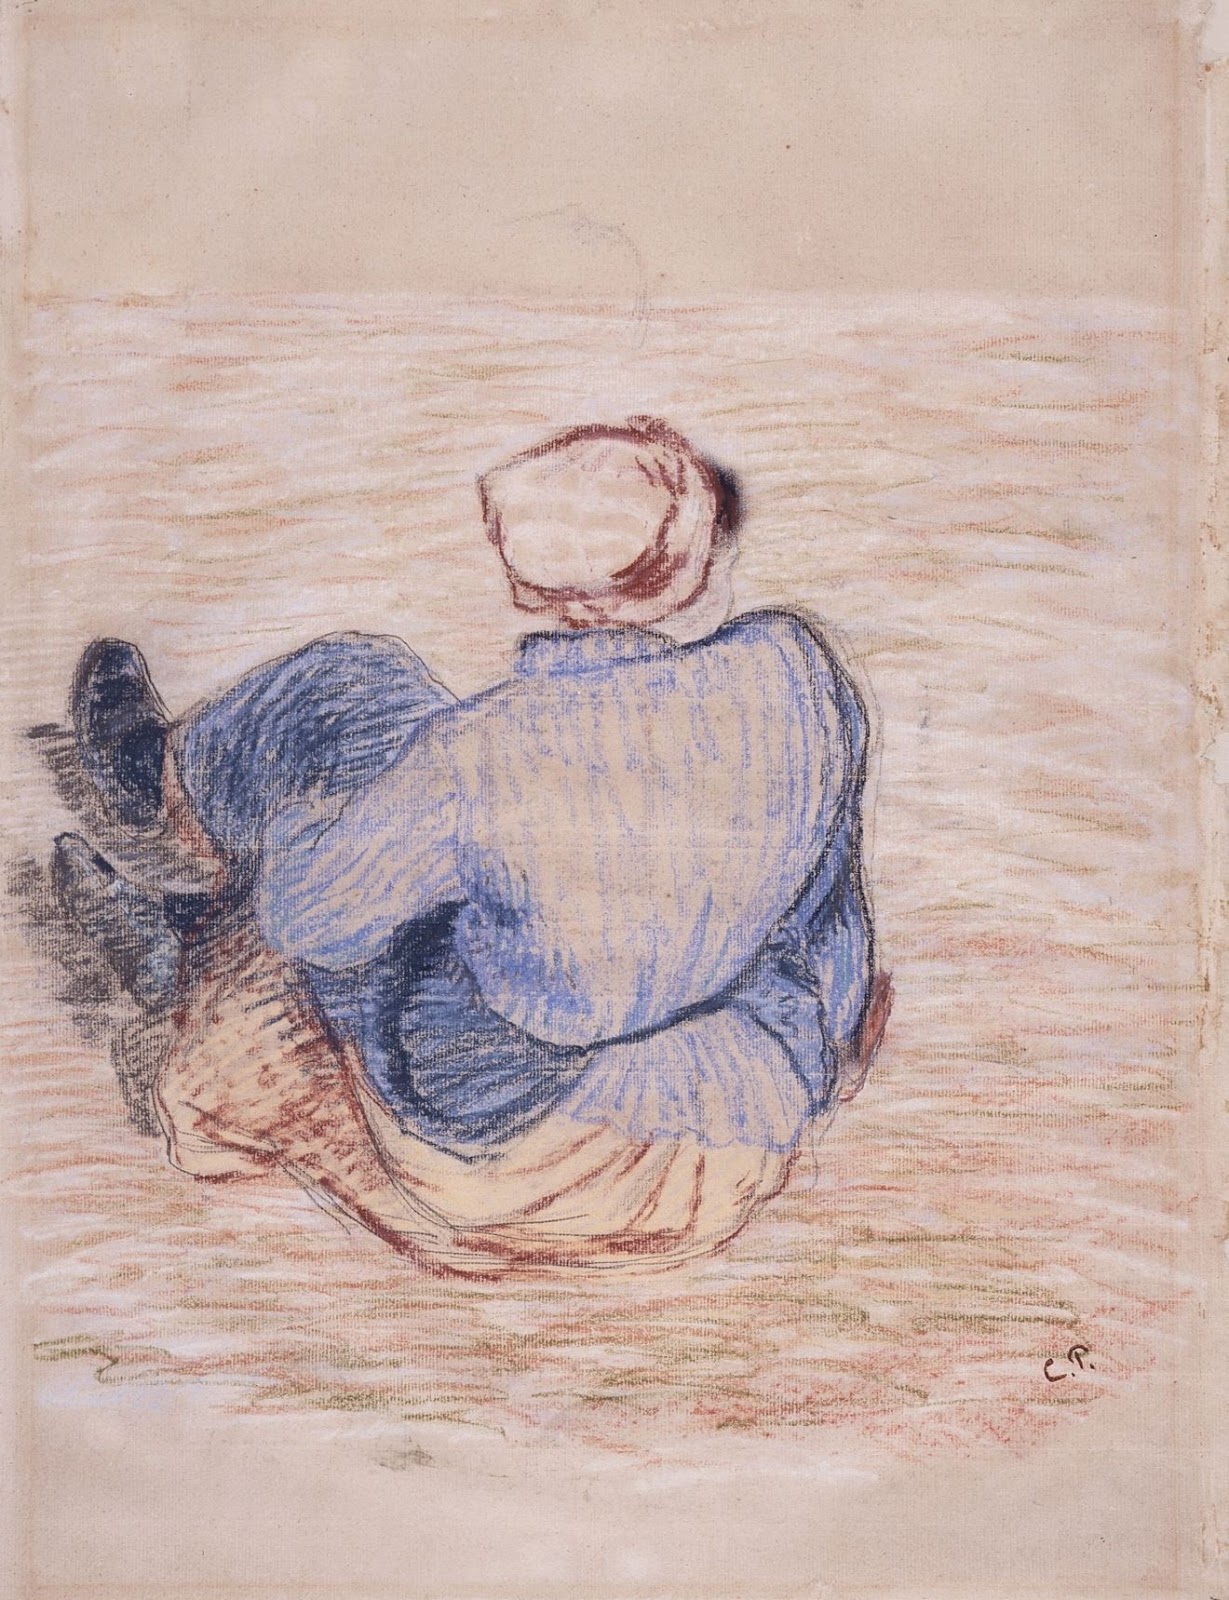 Camille+Pissarro-1830-1903 (217).jpg